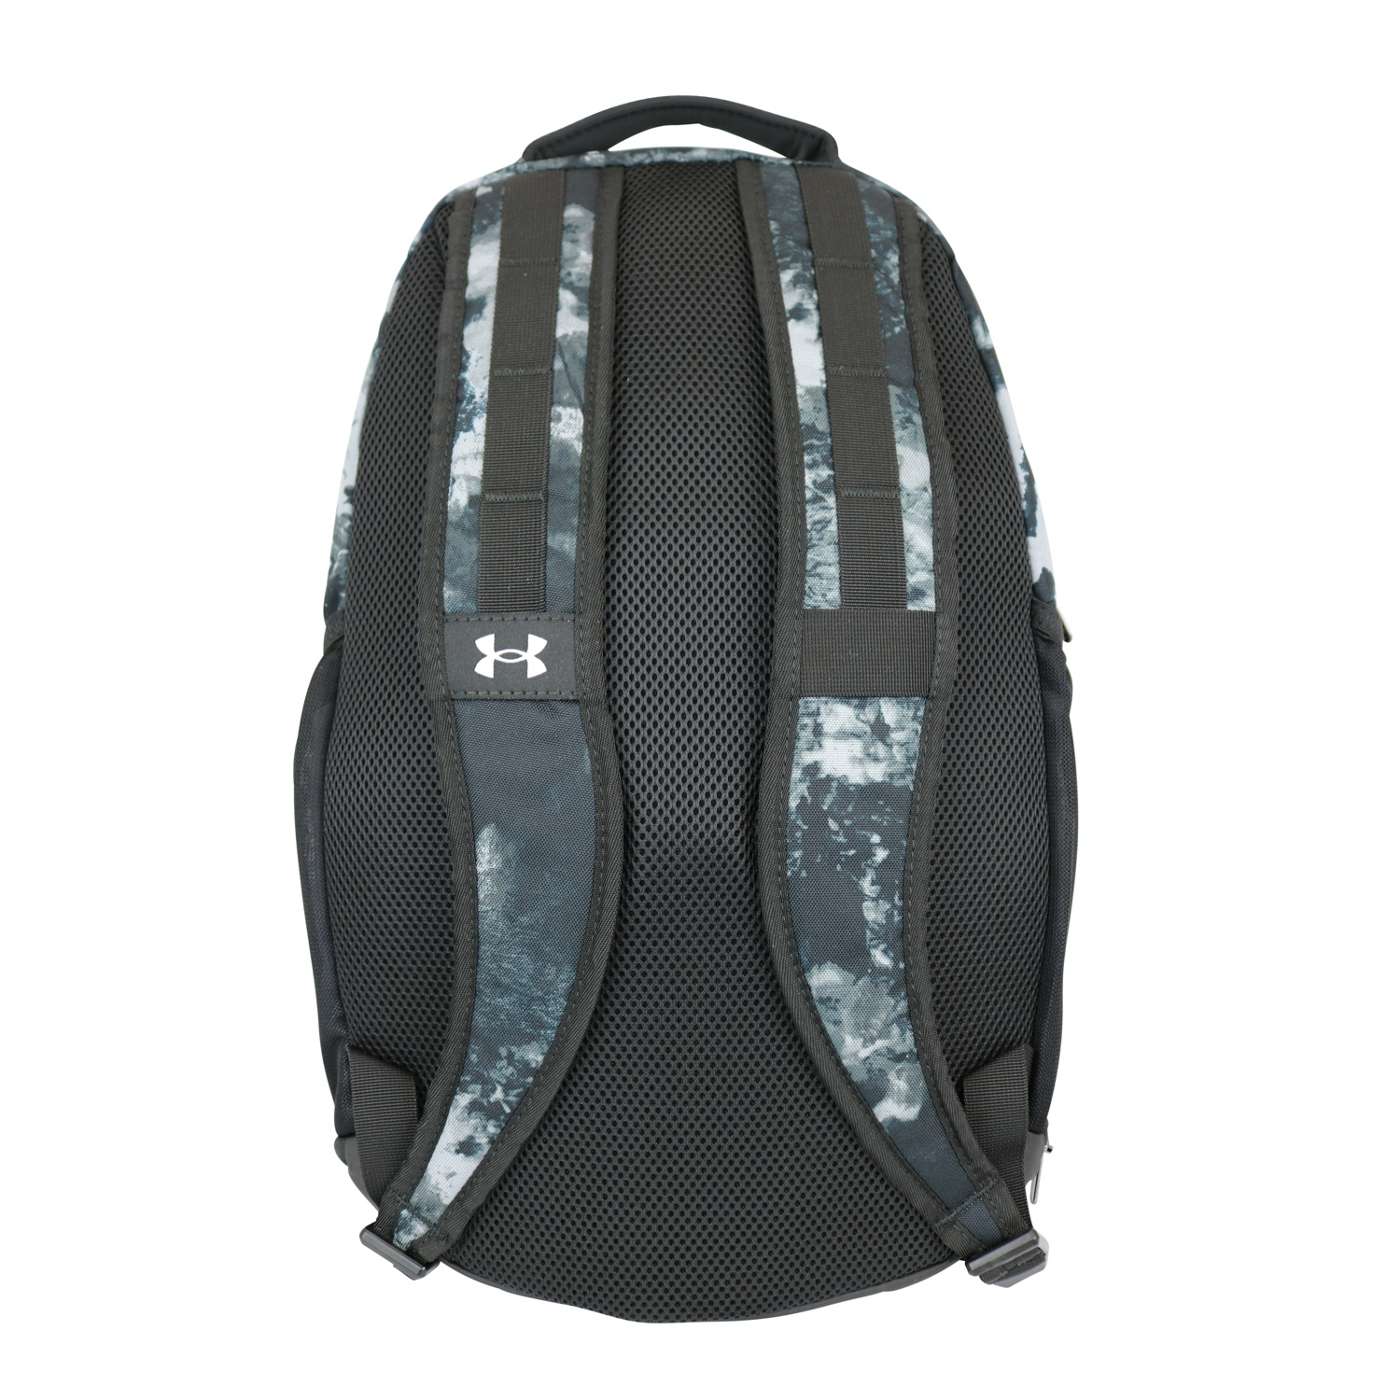 Under Armour Hustle Backpack - Black/White - Shop Backpacks at H-E-B